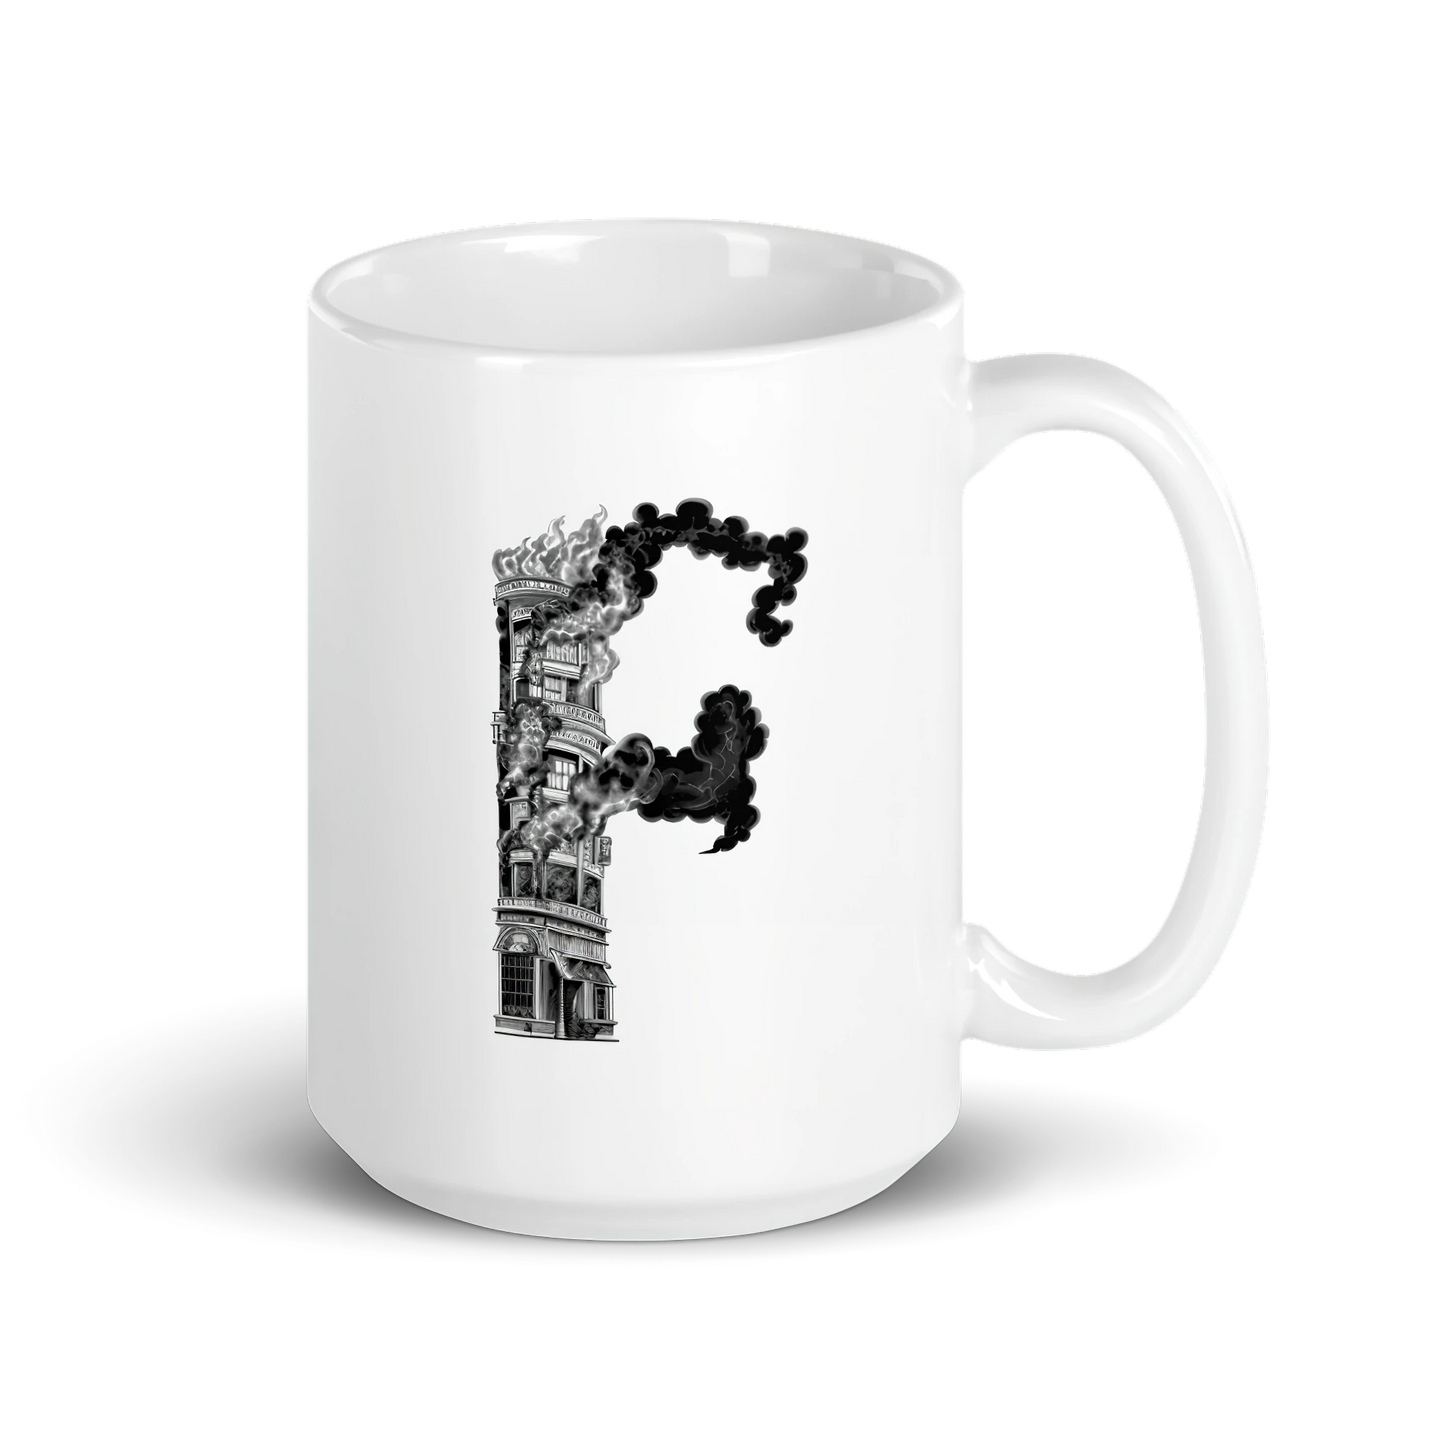 Phonics Letter Art - F for Fire: Ceramic Mug